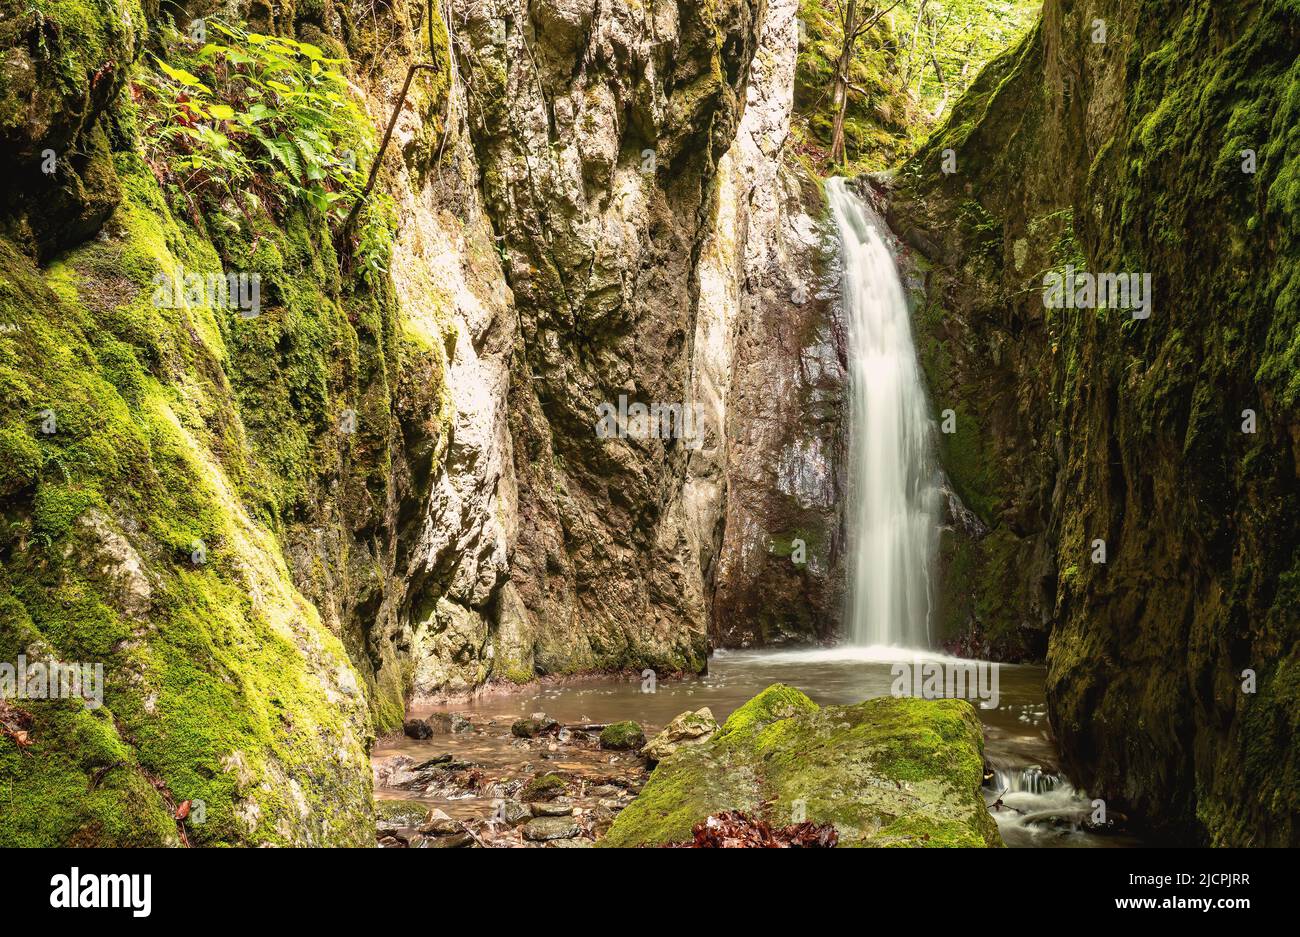 cascada bedina en el bosque, valle de cerna, rumania Foto de stock